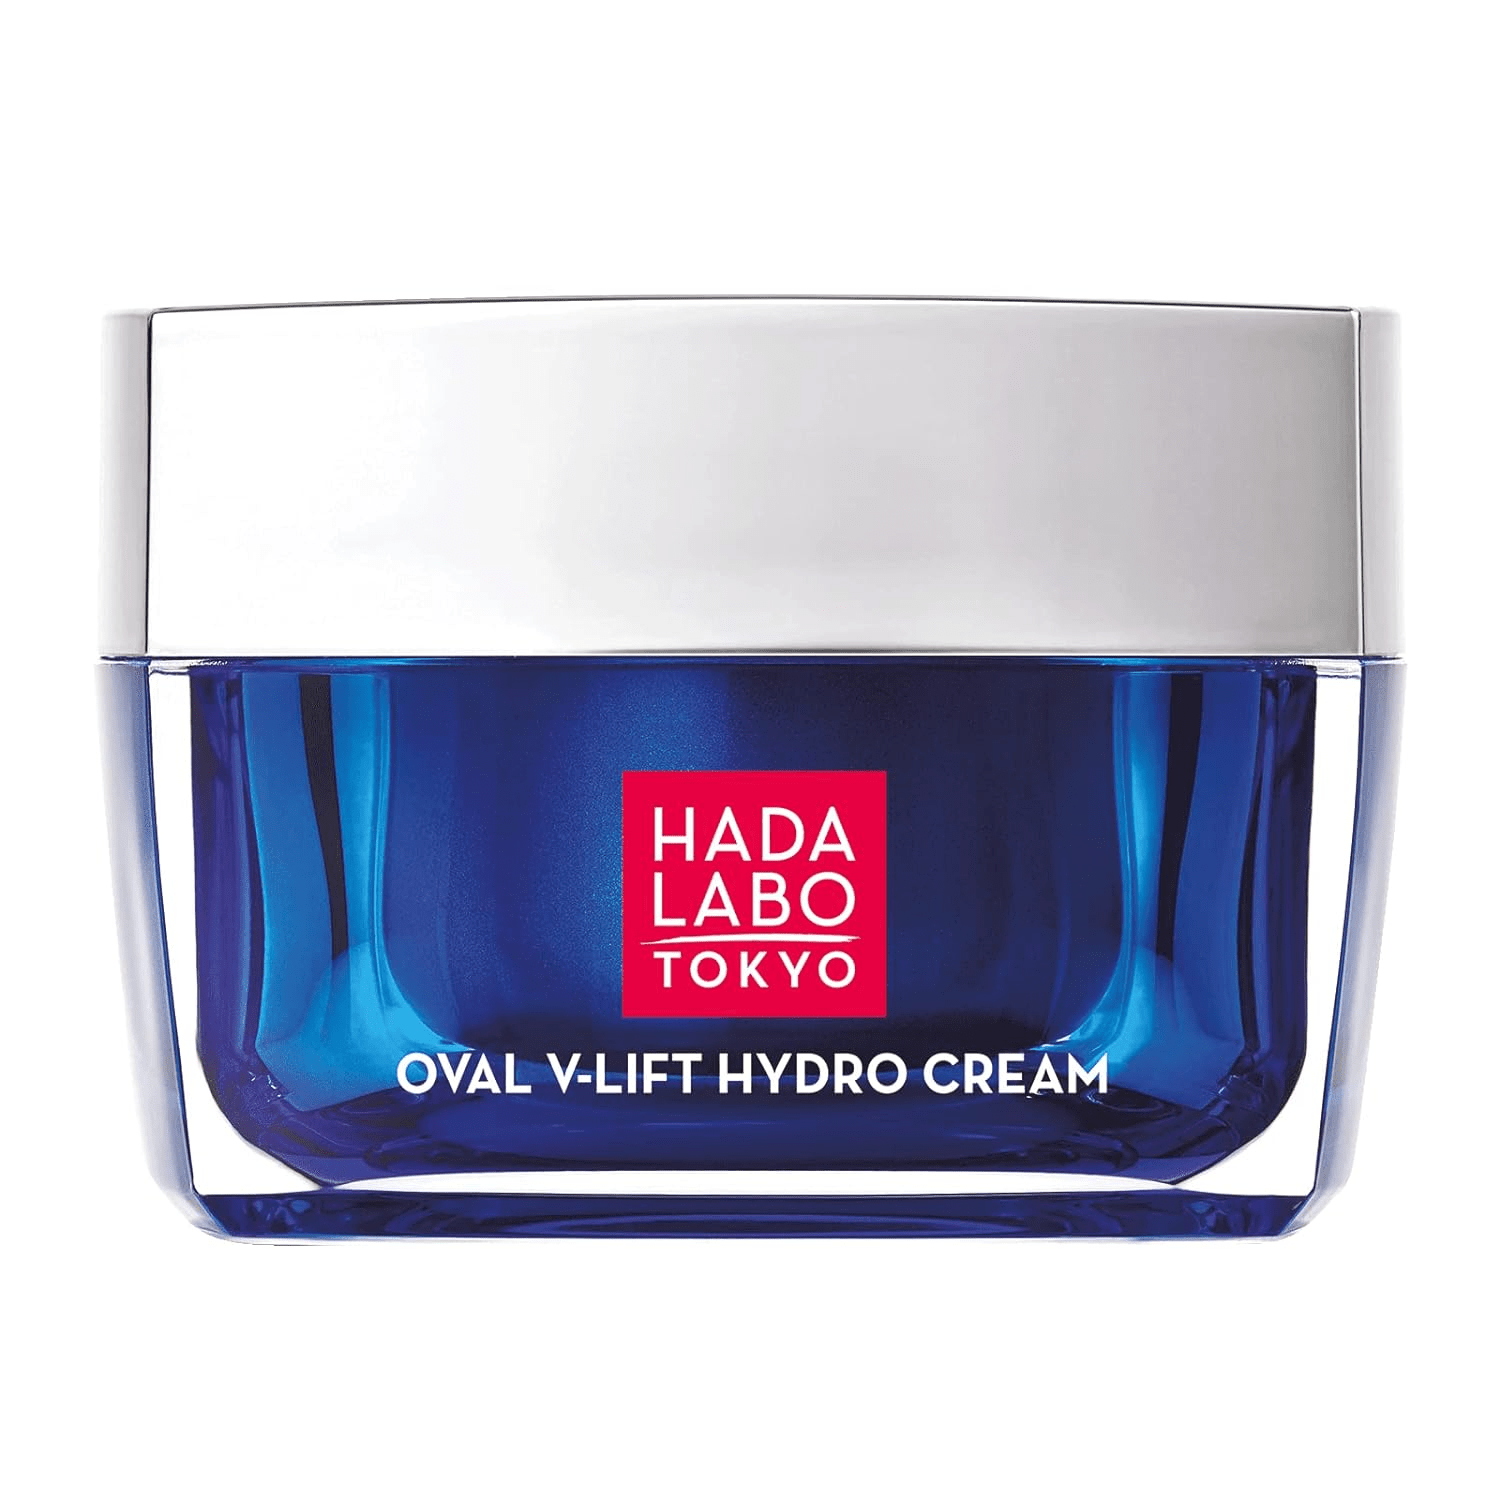 skincare-kbeauty-glowtime-hada labo tokyo anti aging oval v lift hydro cream